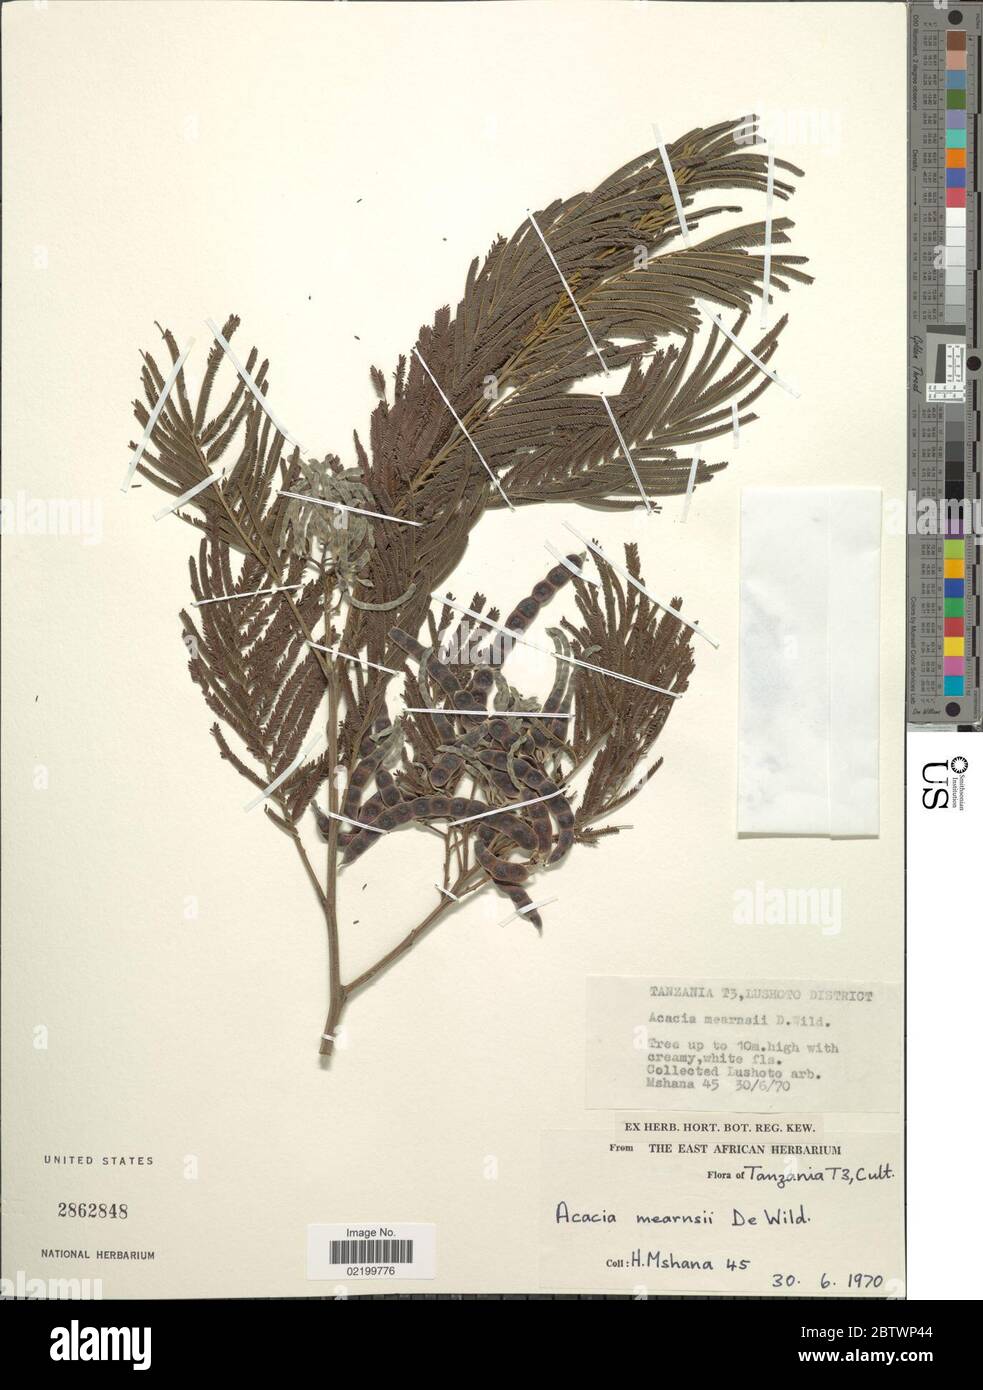 Acacia decurrens Willd. Stock Photo